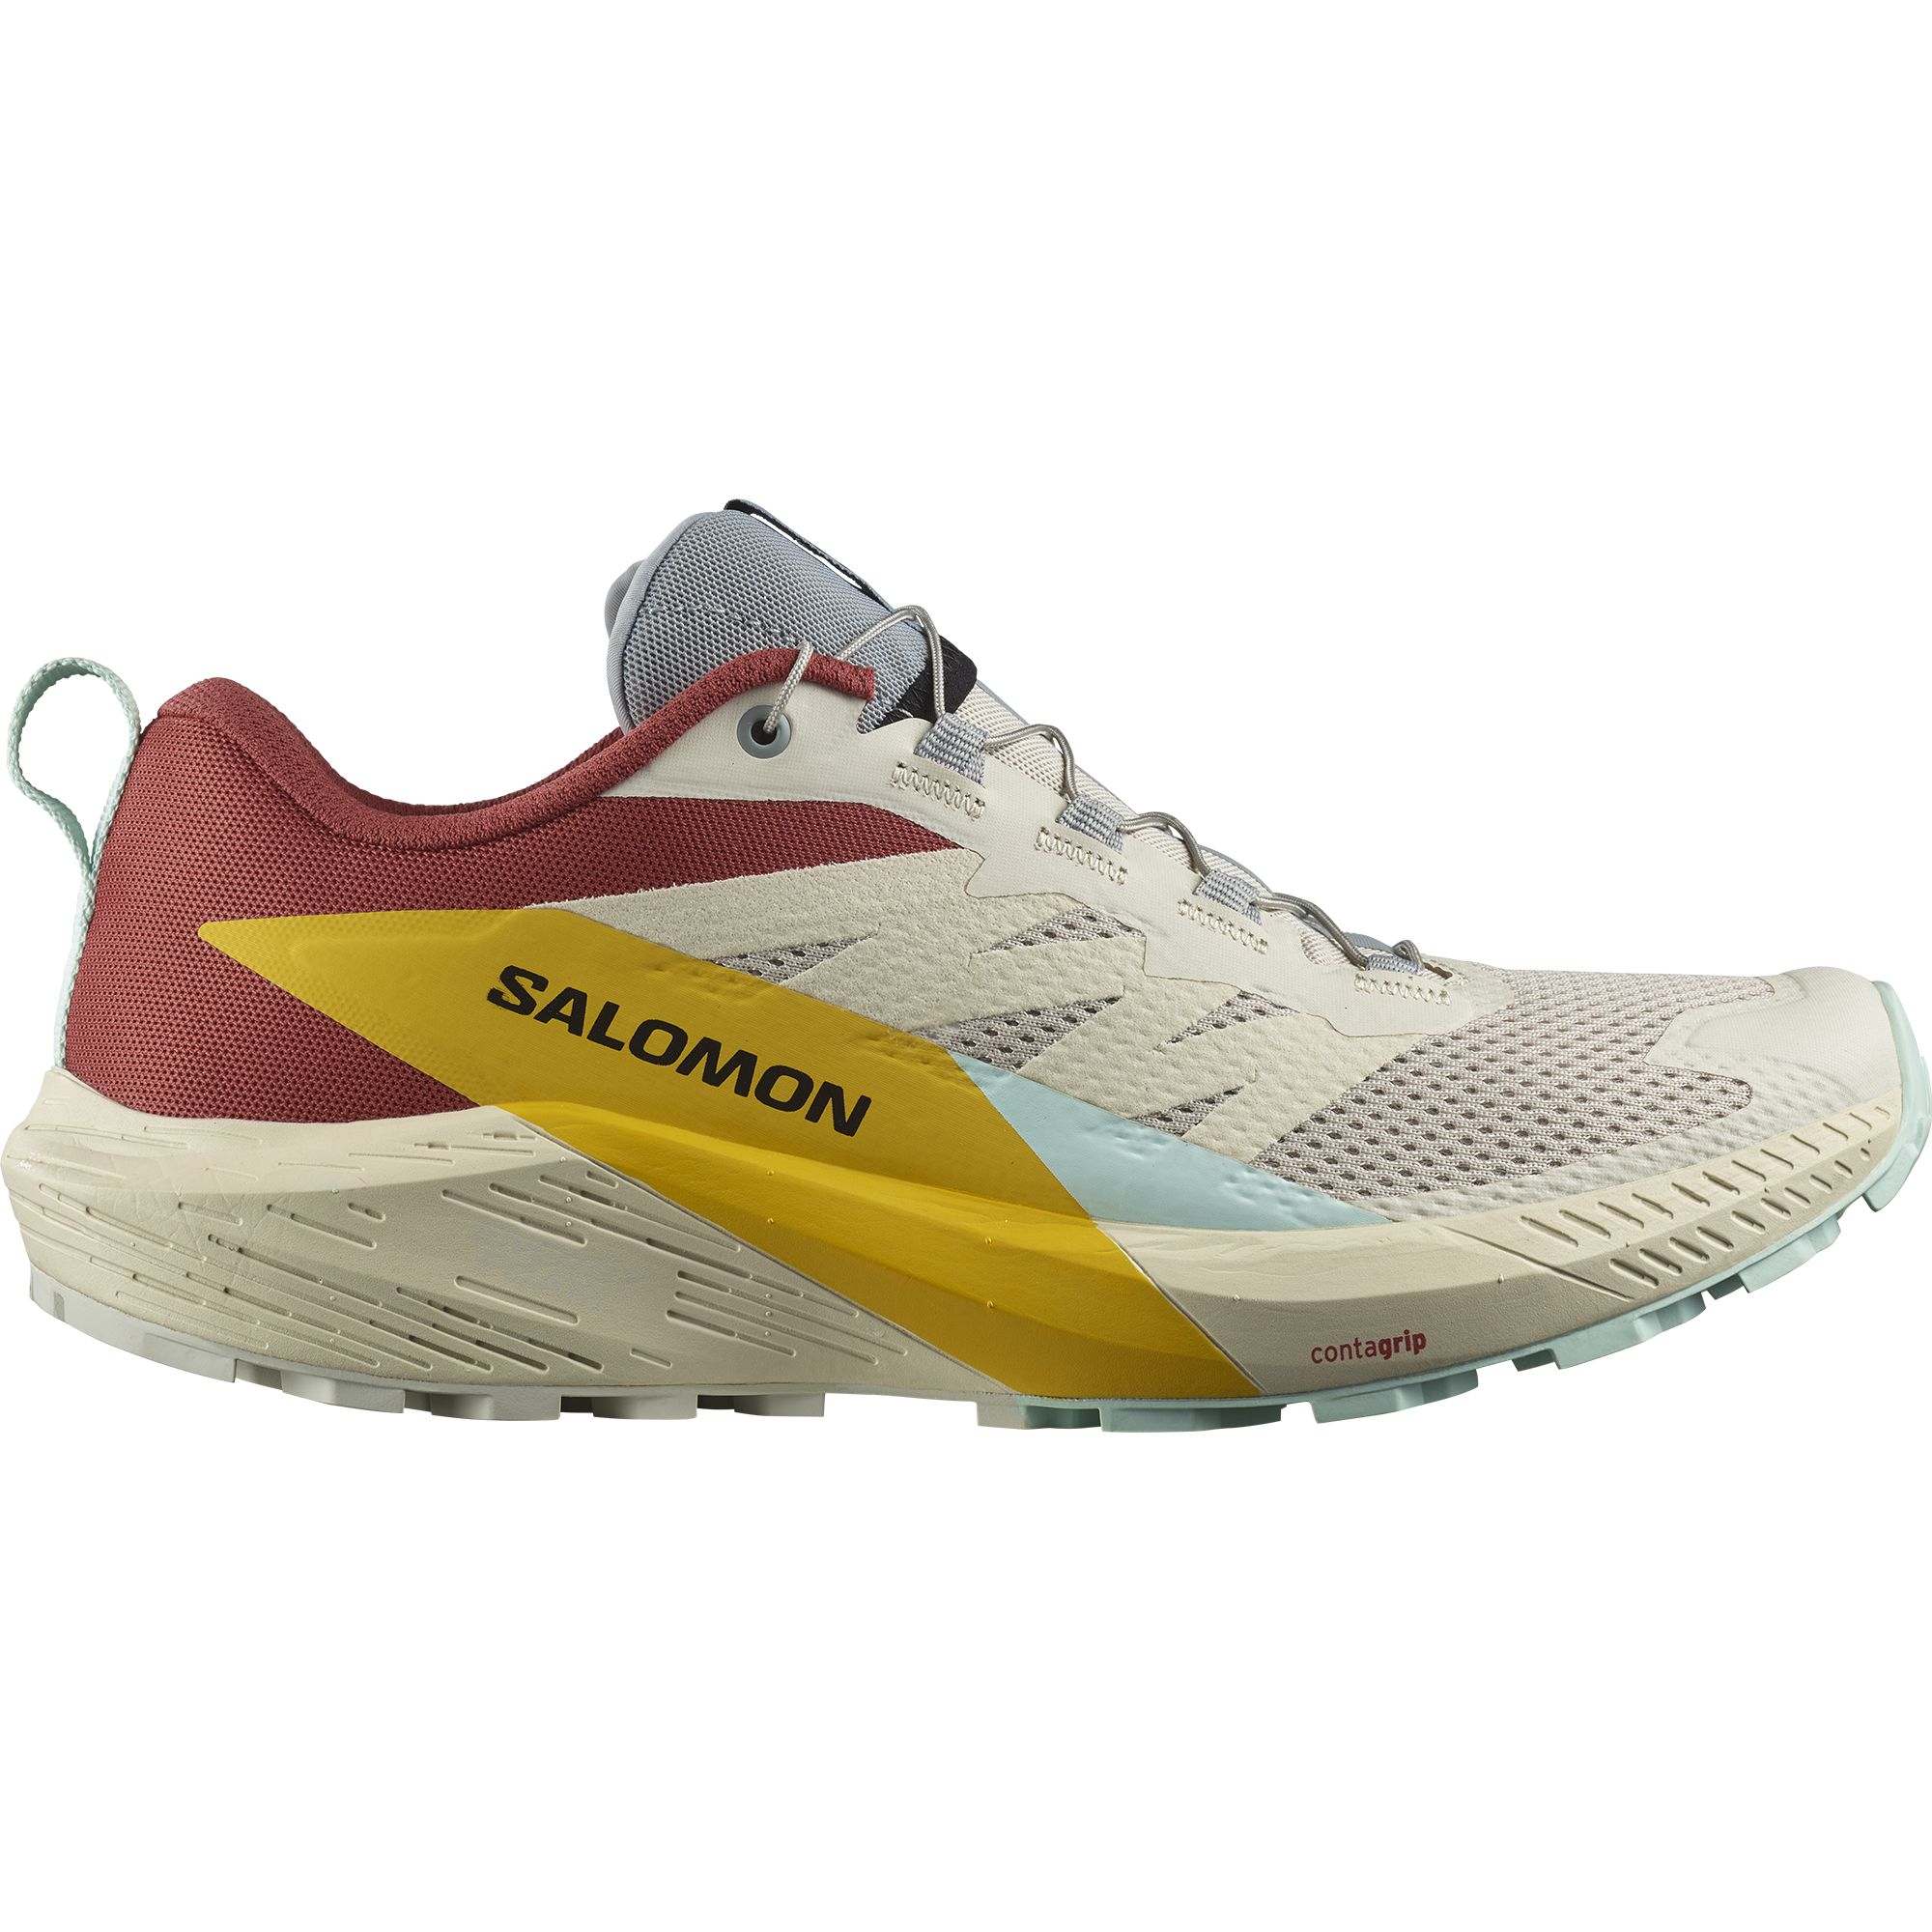 Image of Salomon Men's Sense Ride 5 Cushioned Lightweight Trail Running Shoes